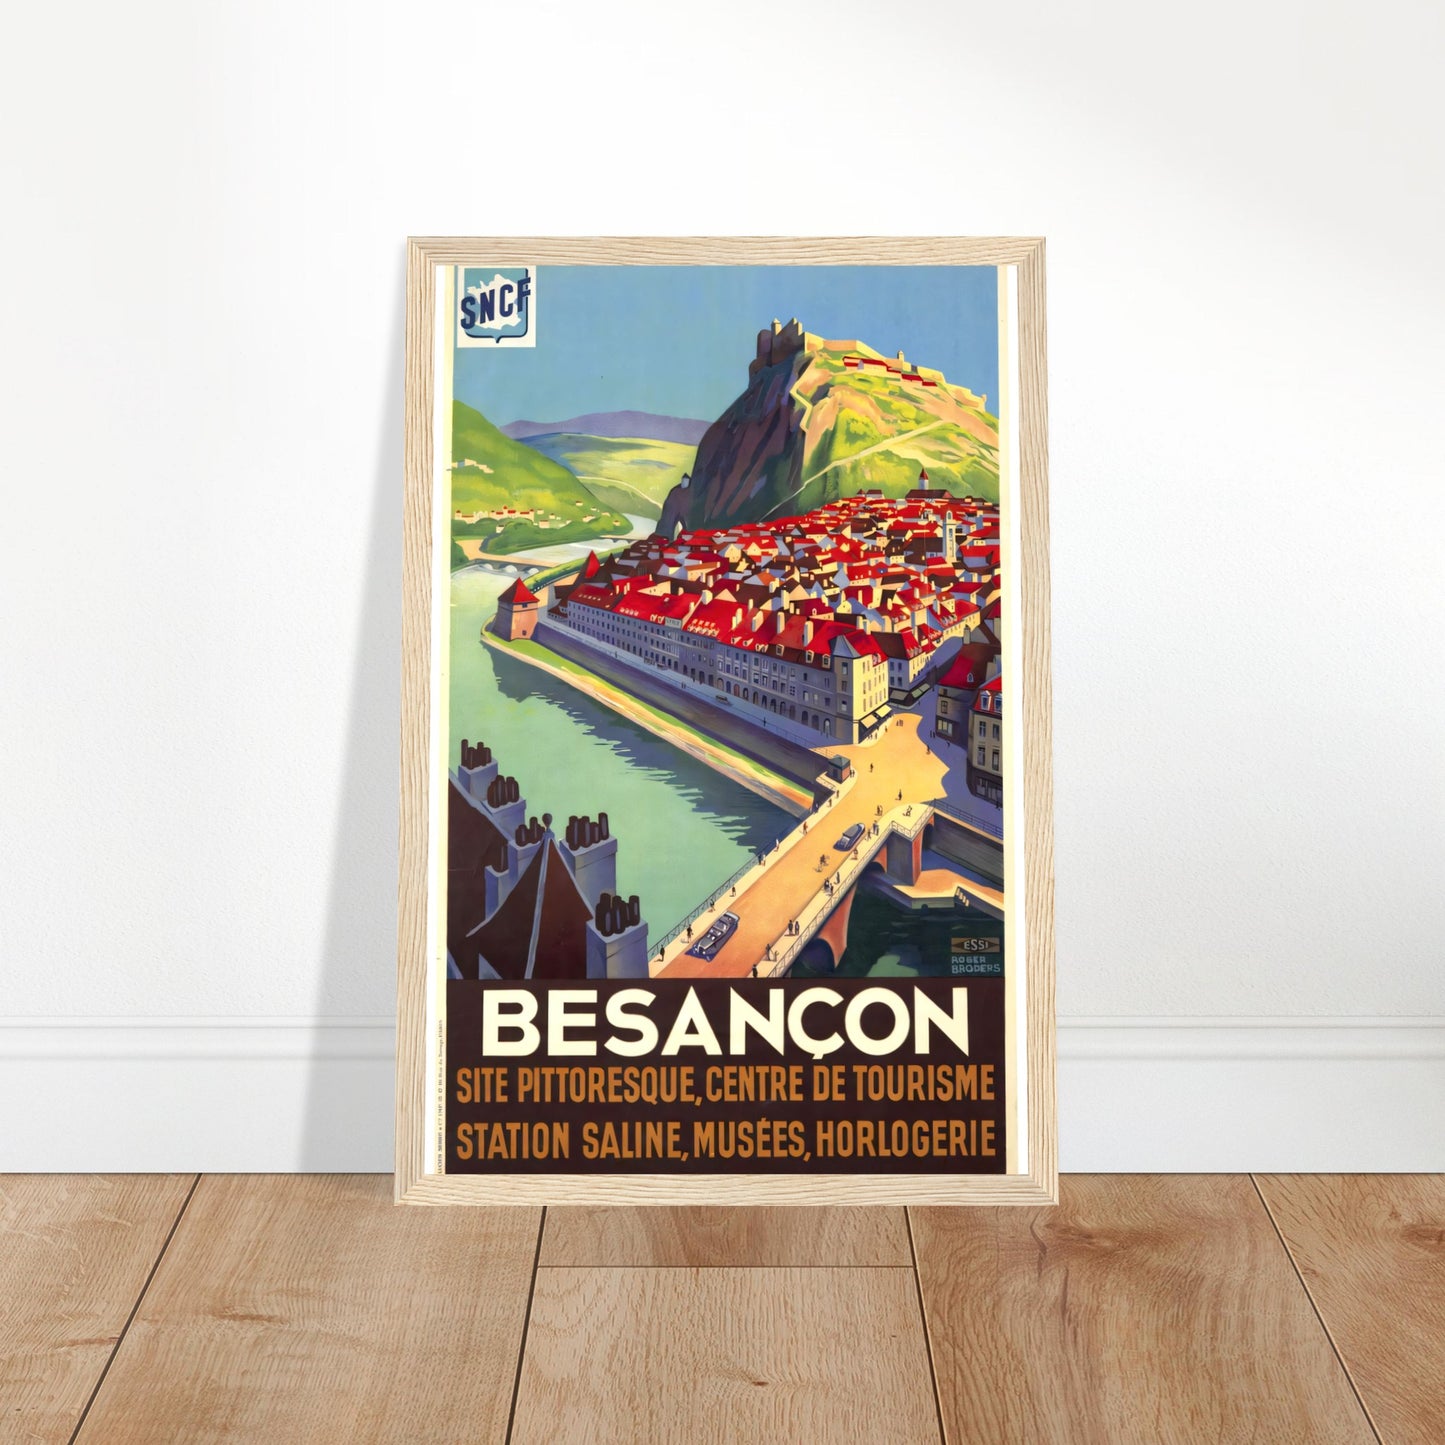 Besancon Vintage Poster Reprint on Premium Matte Paper - Posterify